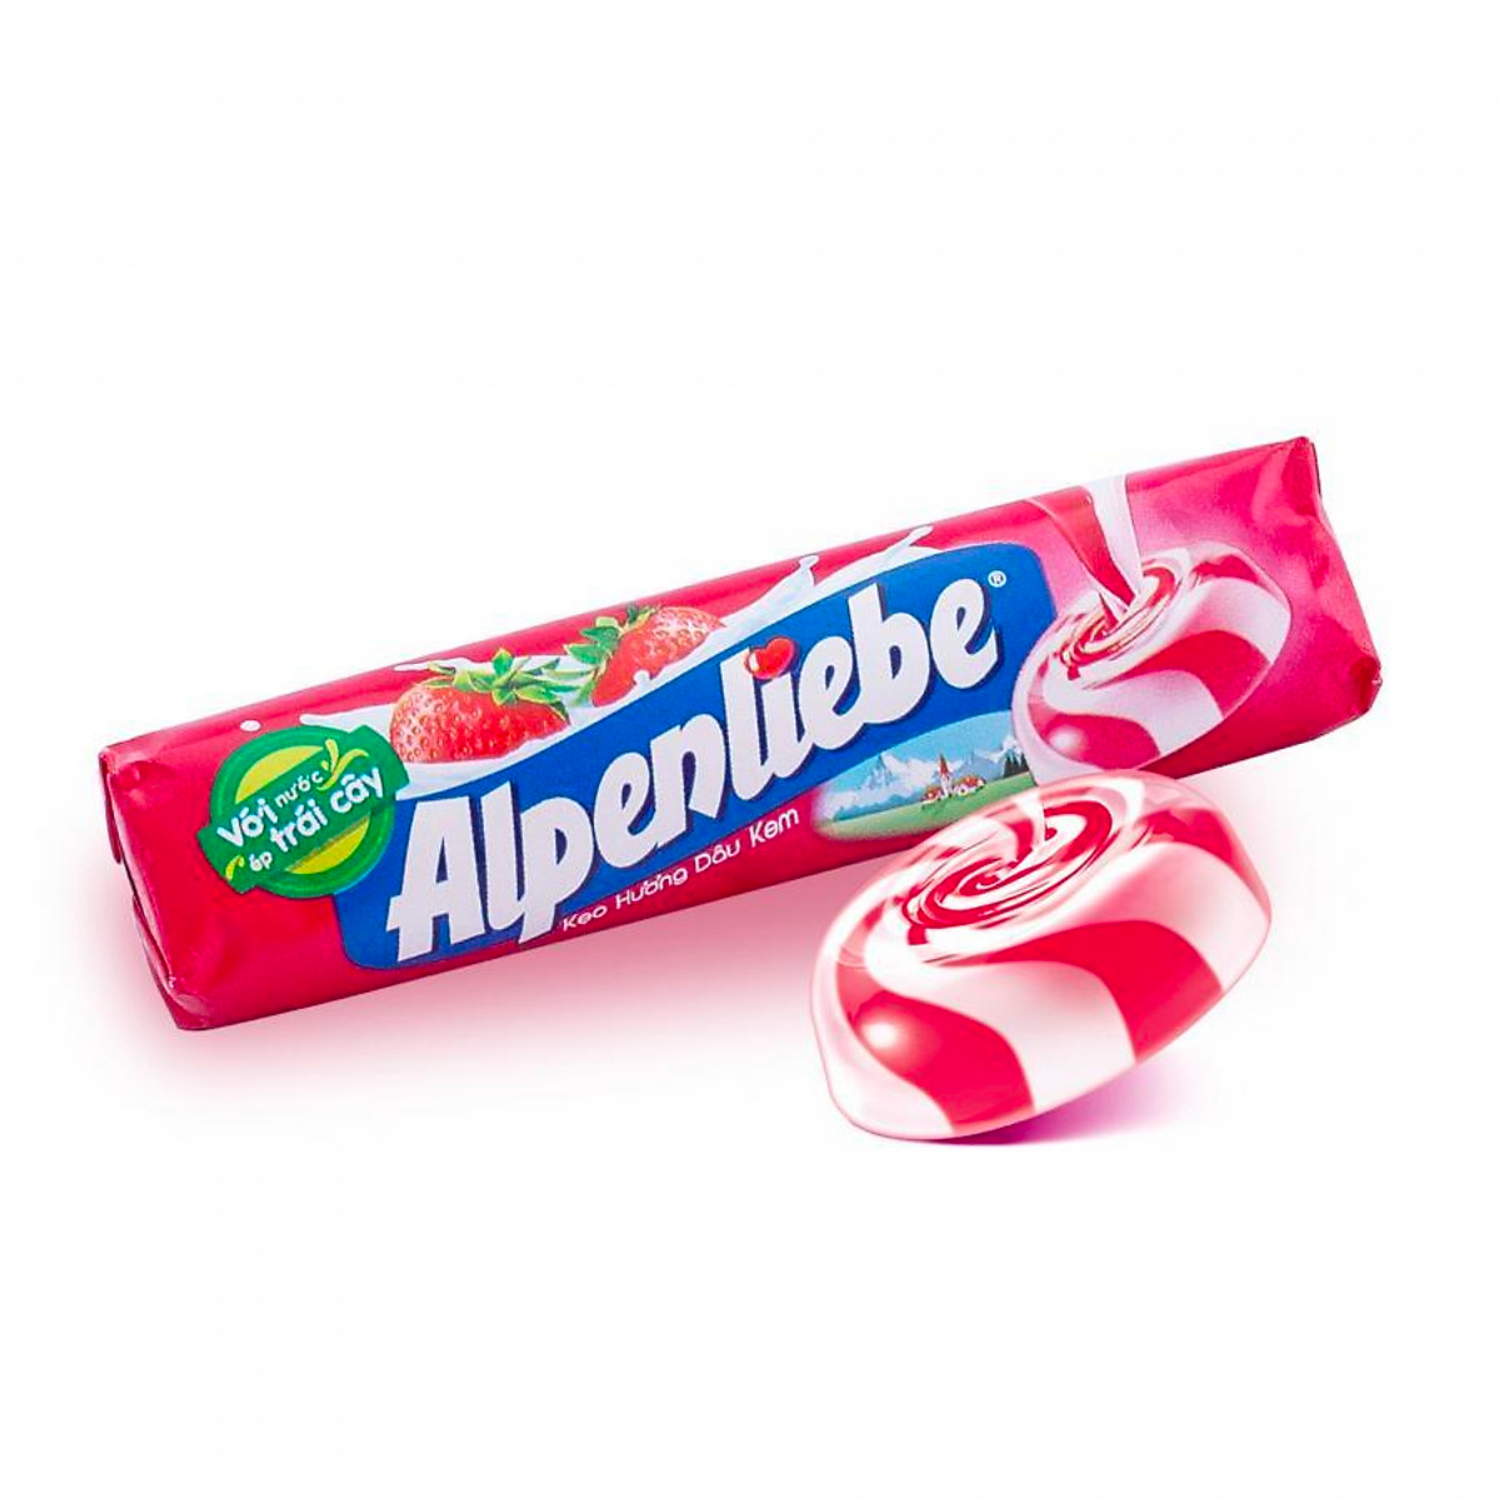 Карамель Alpenliebe. Леденцы Alpenliebe. Леденцы клубника со сливками Alpenliebe. Альпенлибе конфеты.